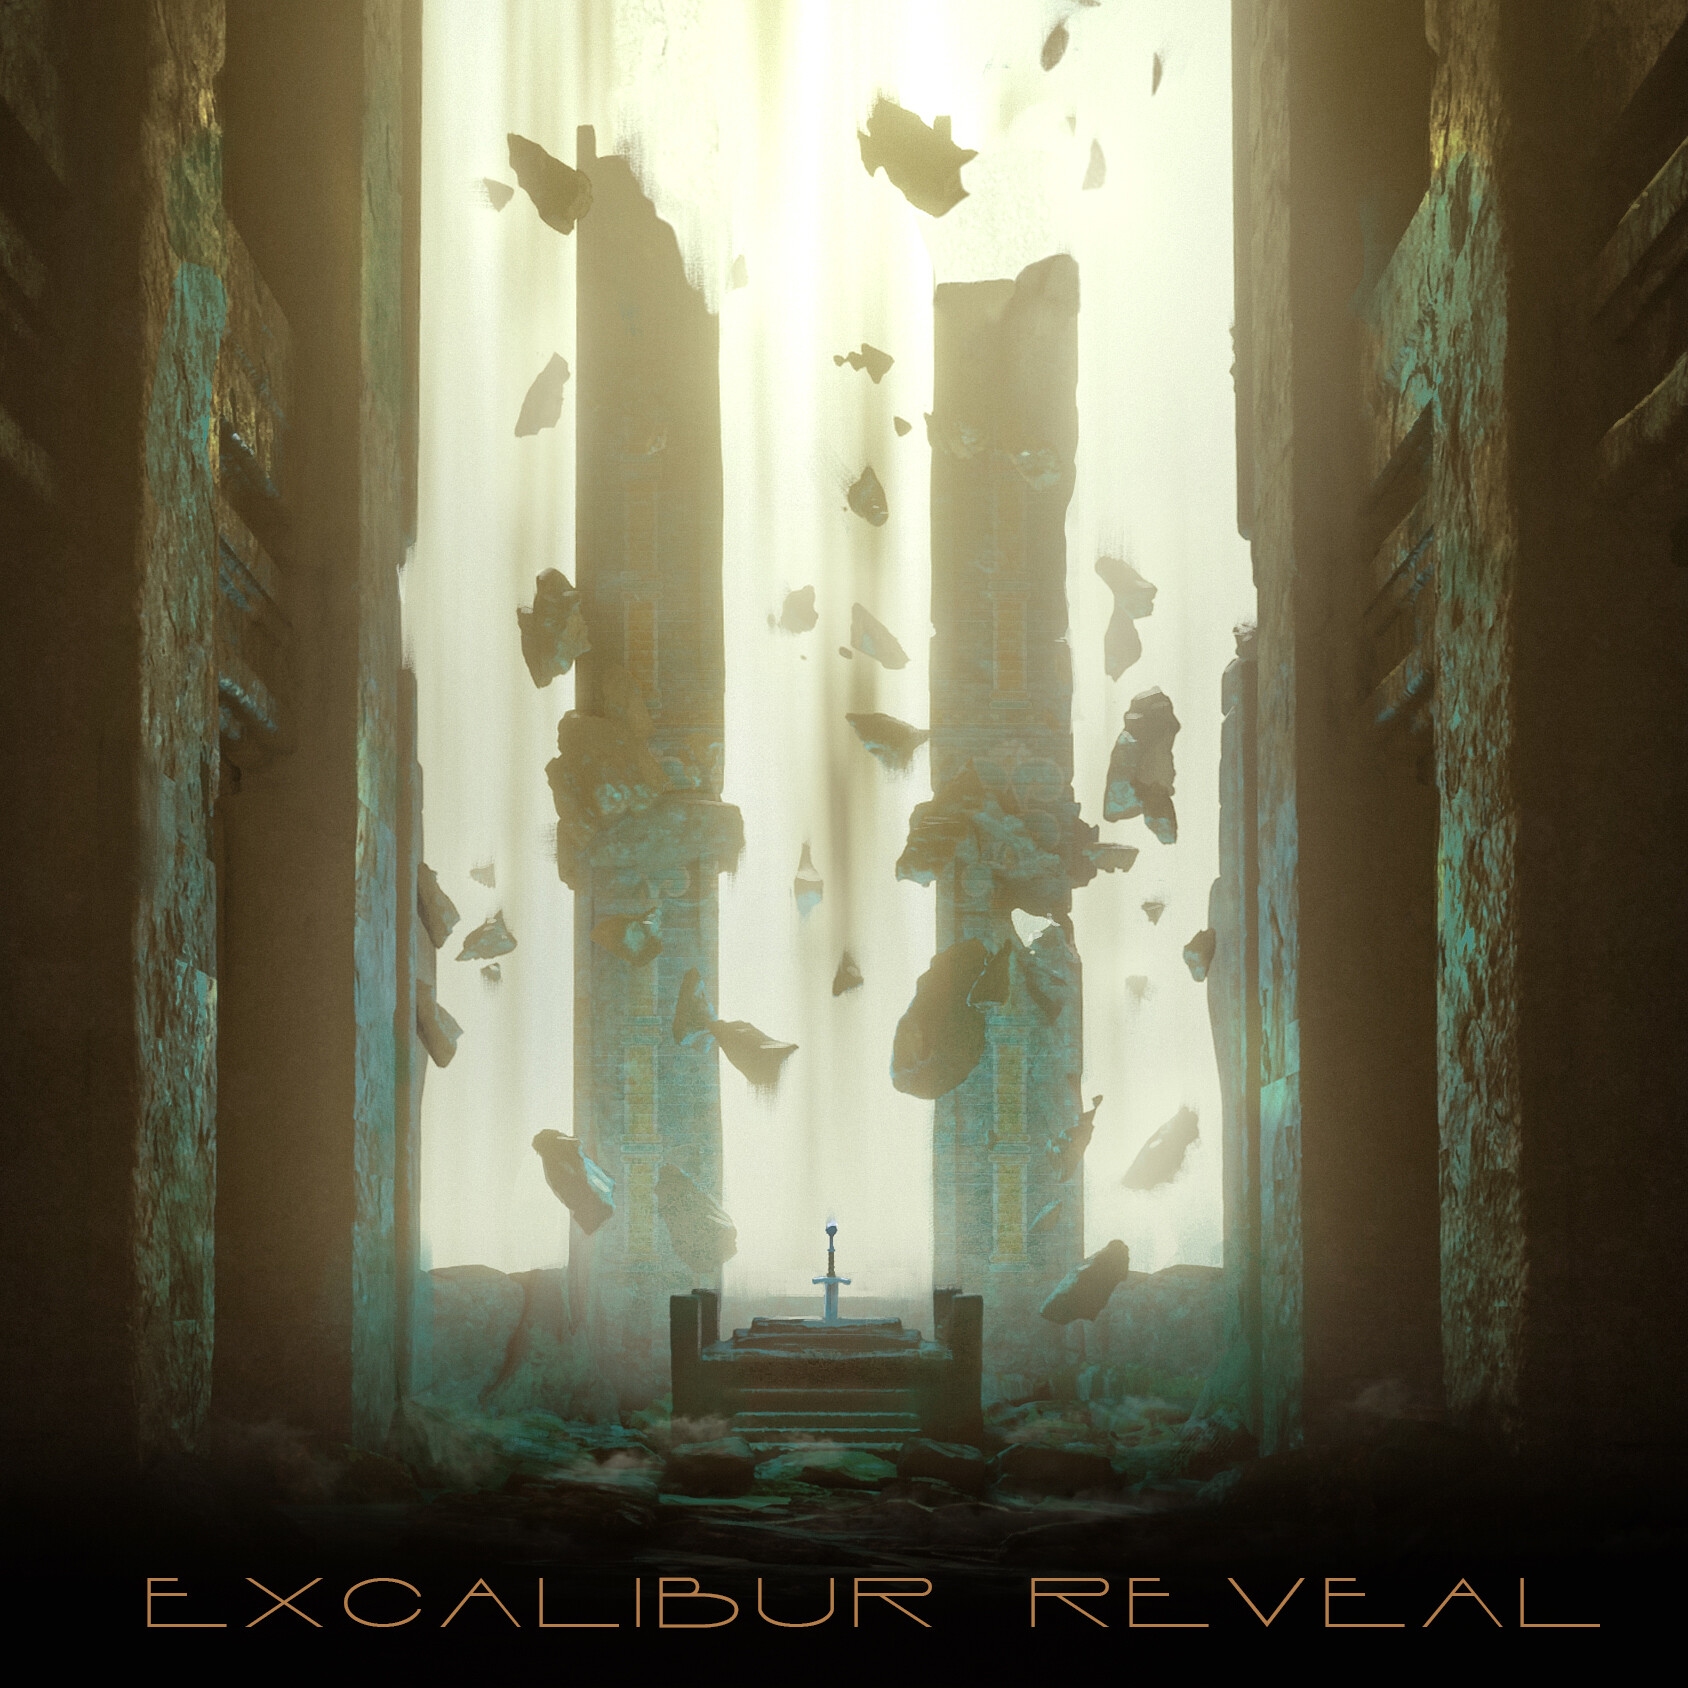 ArtStation - Excalibur reveal moment